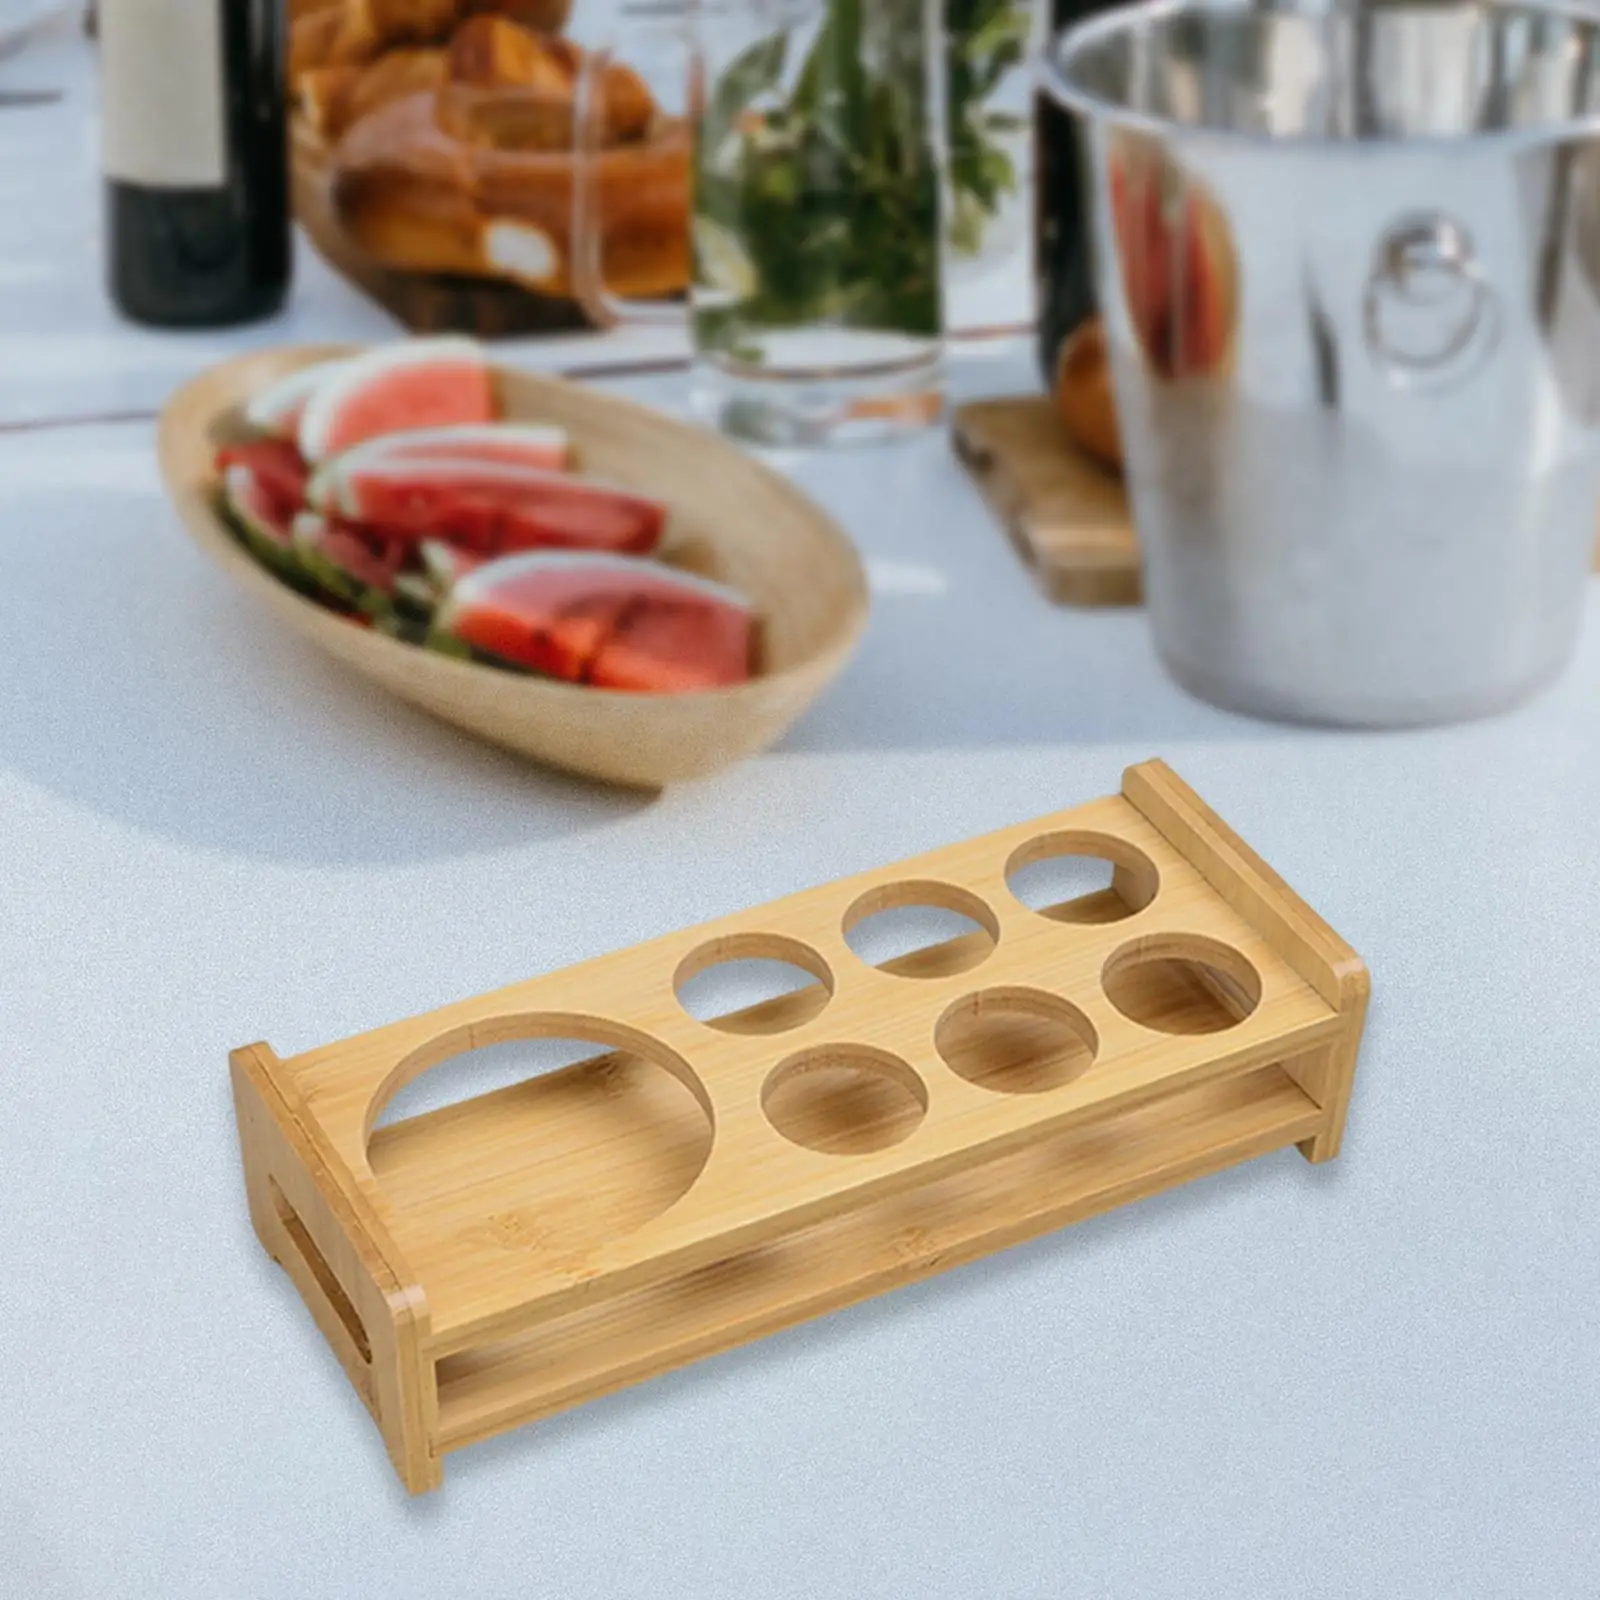 Wood Shot Glass Holder Base Display Rack Cup Rack Serving Tray Mug Organizer for Kitchen Cabinet Events Nightclub